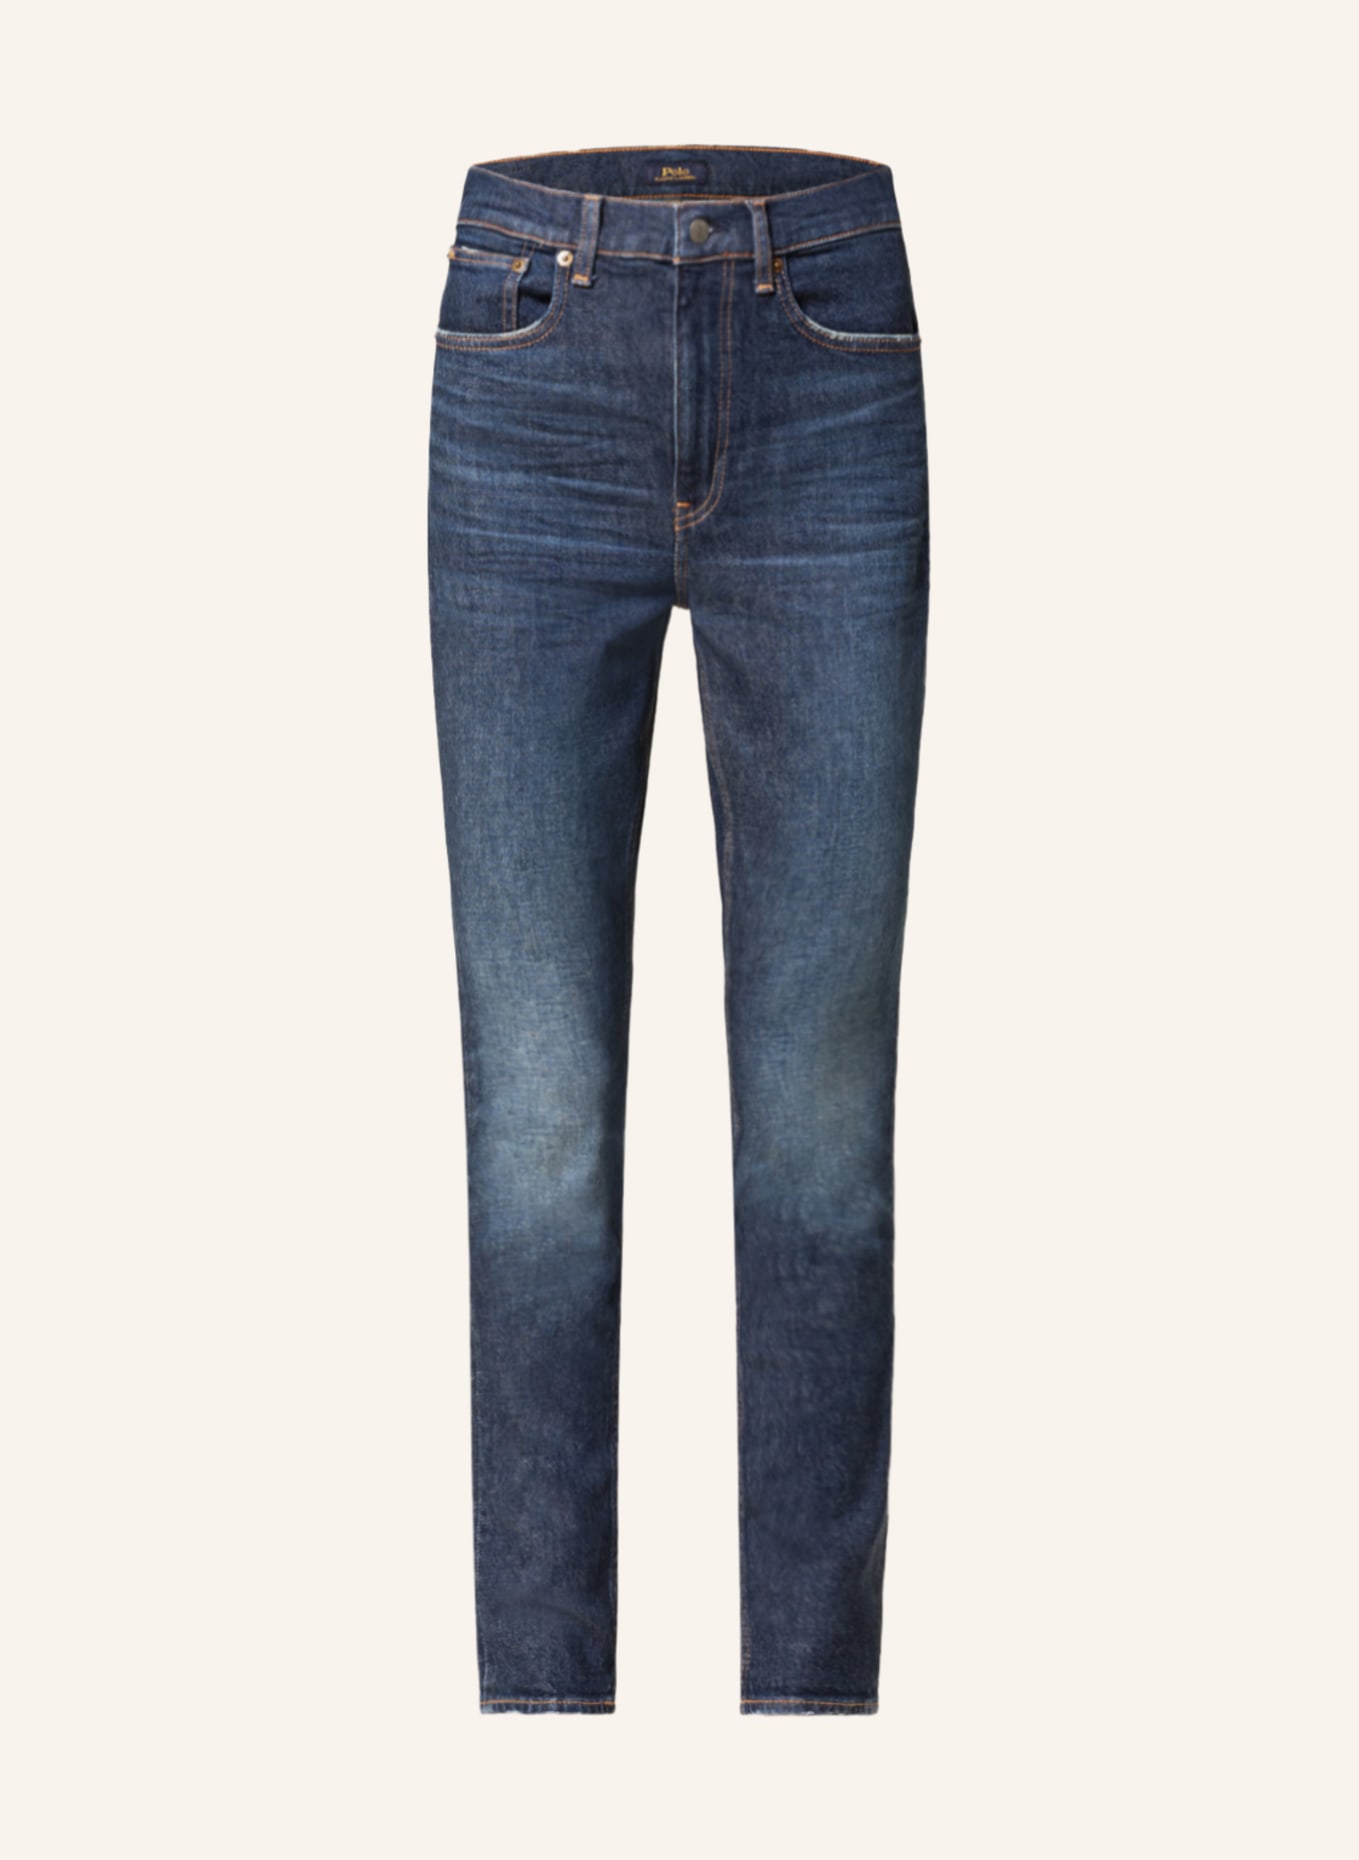 POLO RALPH LAUREN Skinny Jeans, Farbe: 001 CELEBES WASH (Bild 1)